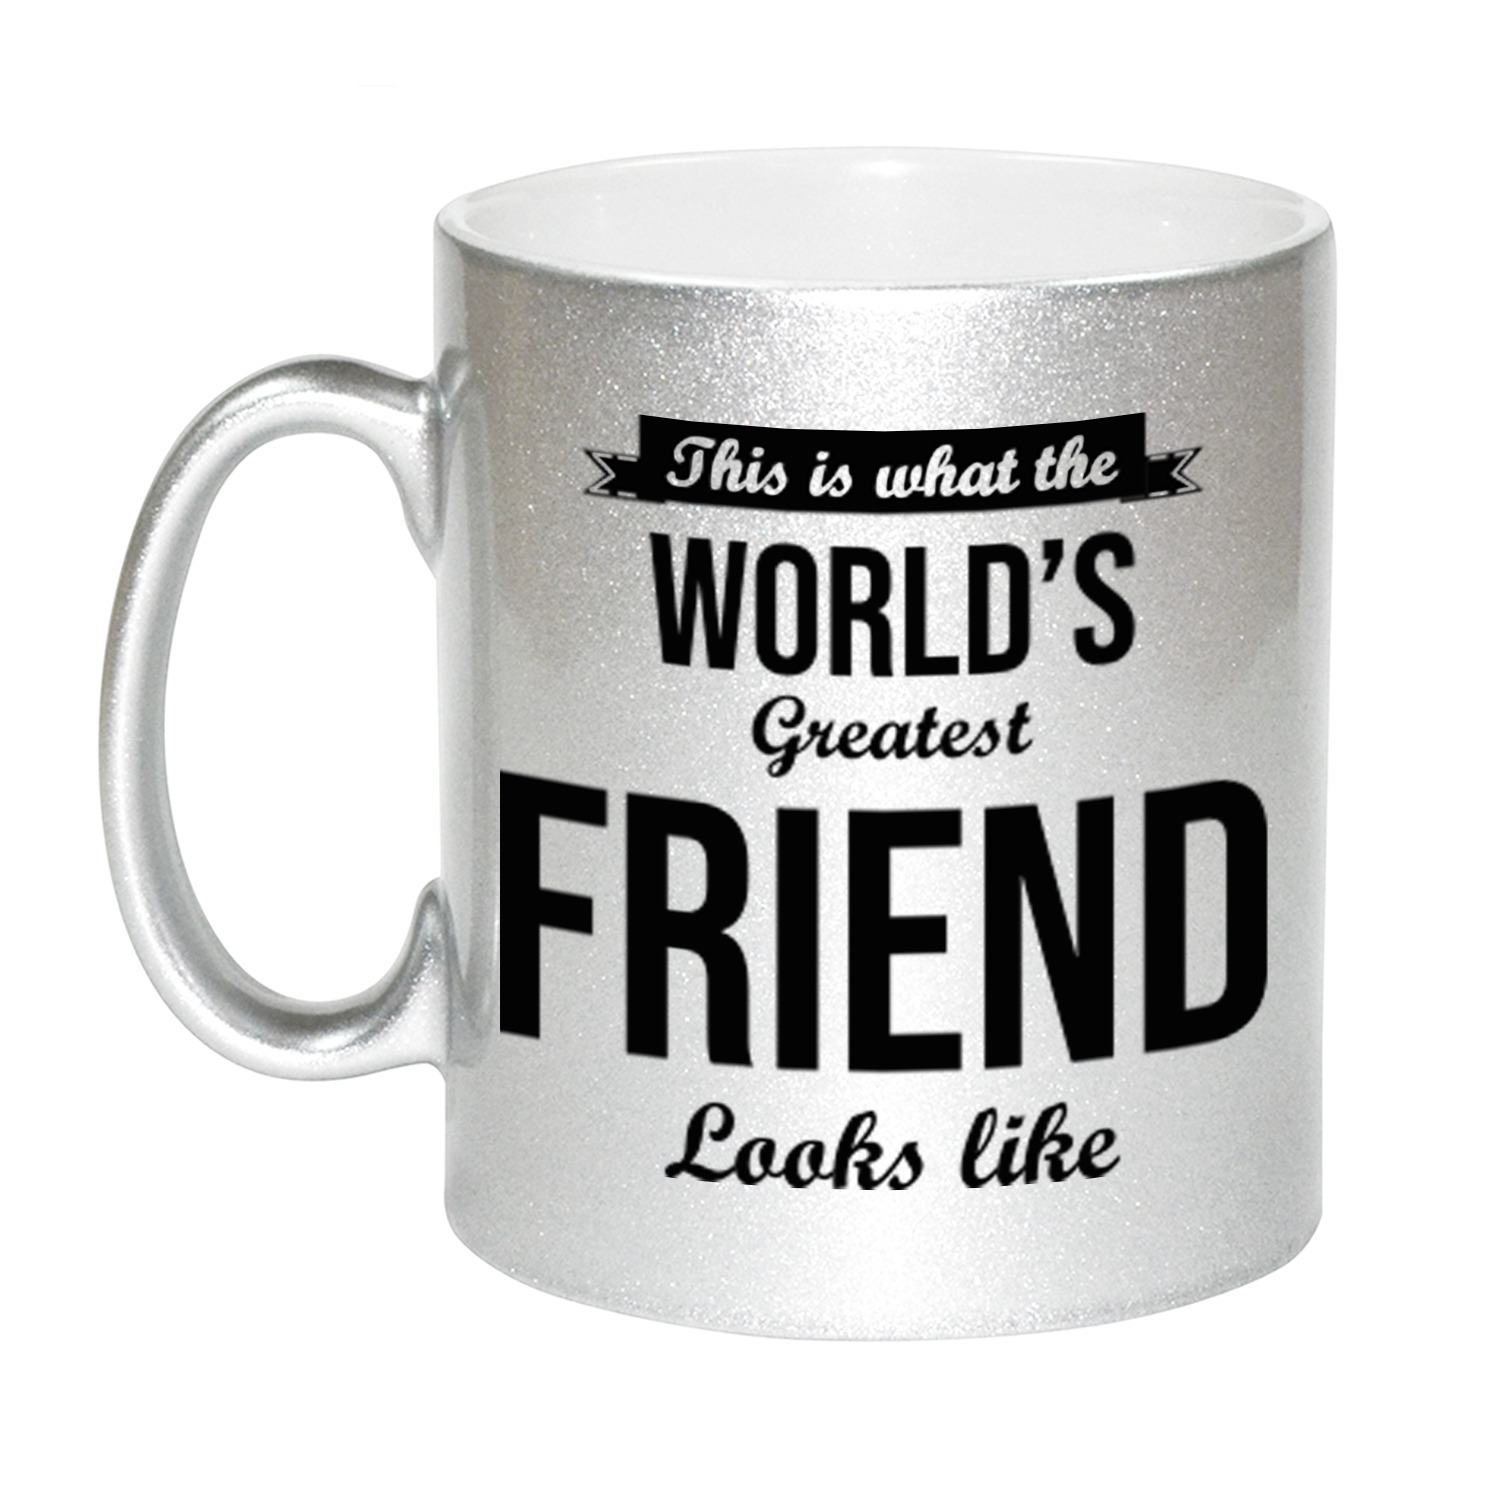 Zilveren Worlds Greatest Friend cadeau koffiemok / theebeker 330 ml